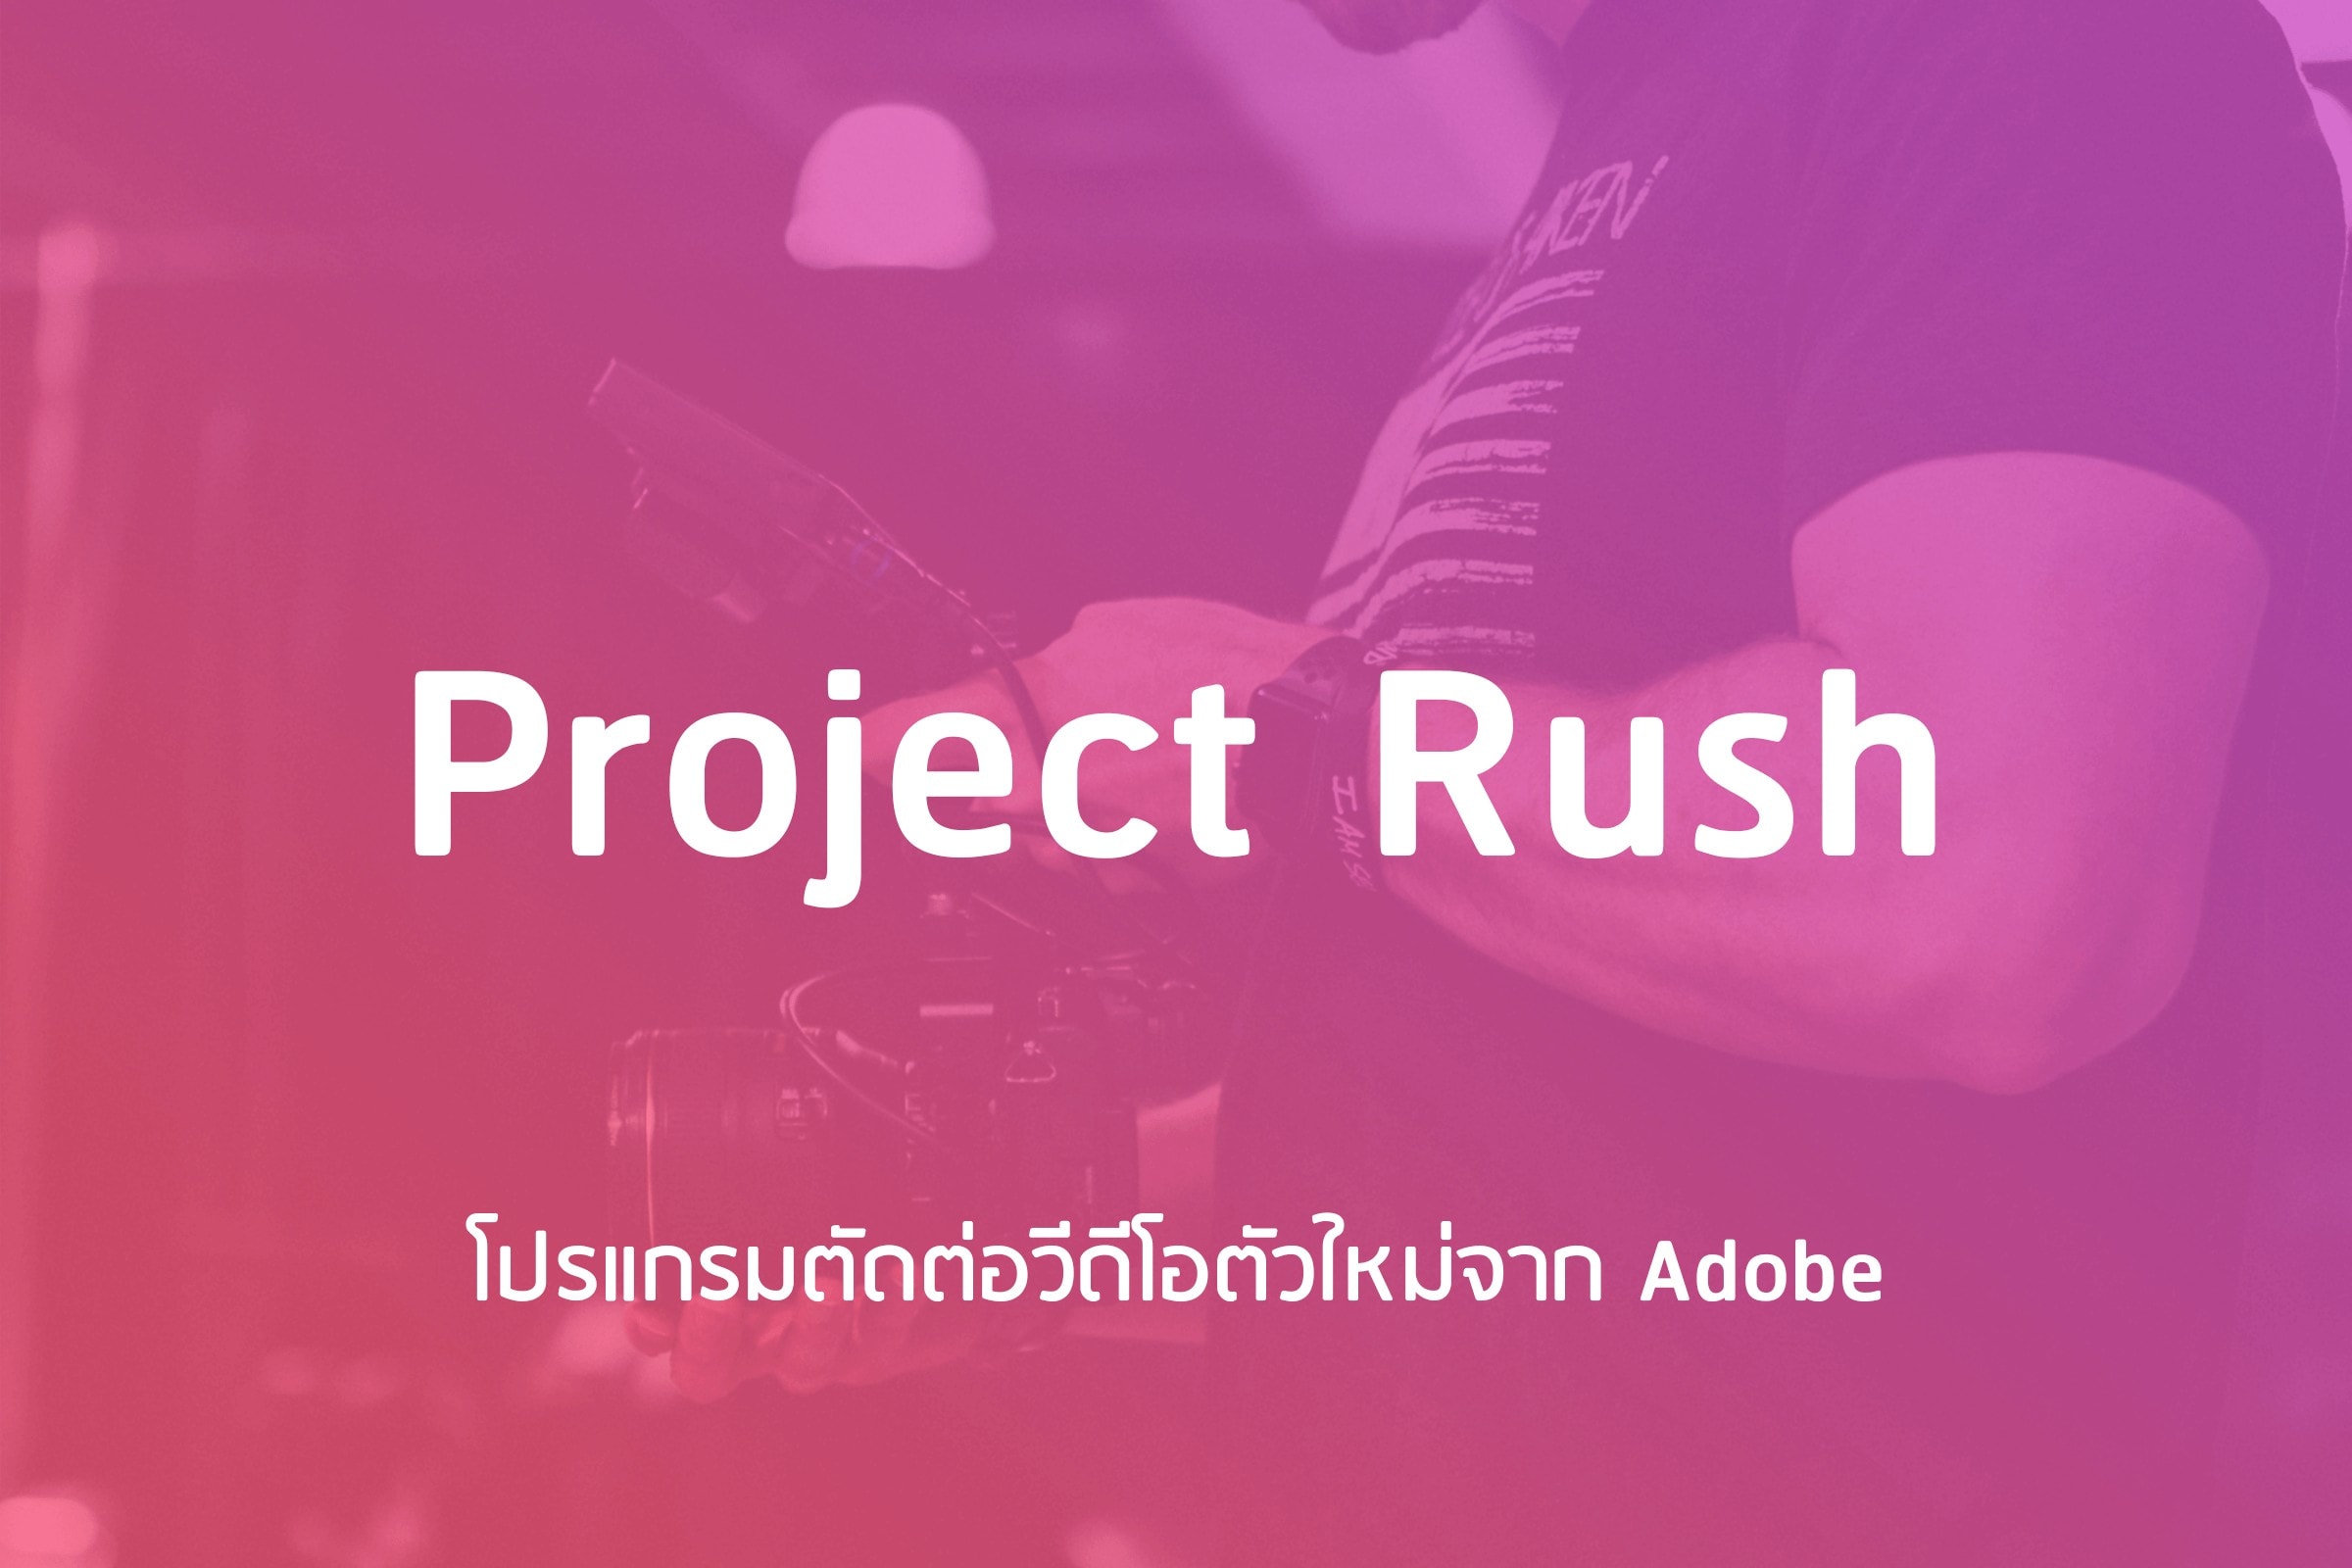 Project Rush โปรแกรมตัดต่อวีดีโอตัวใหม่จาก Adobe